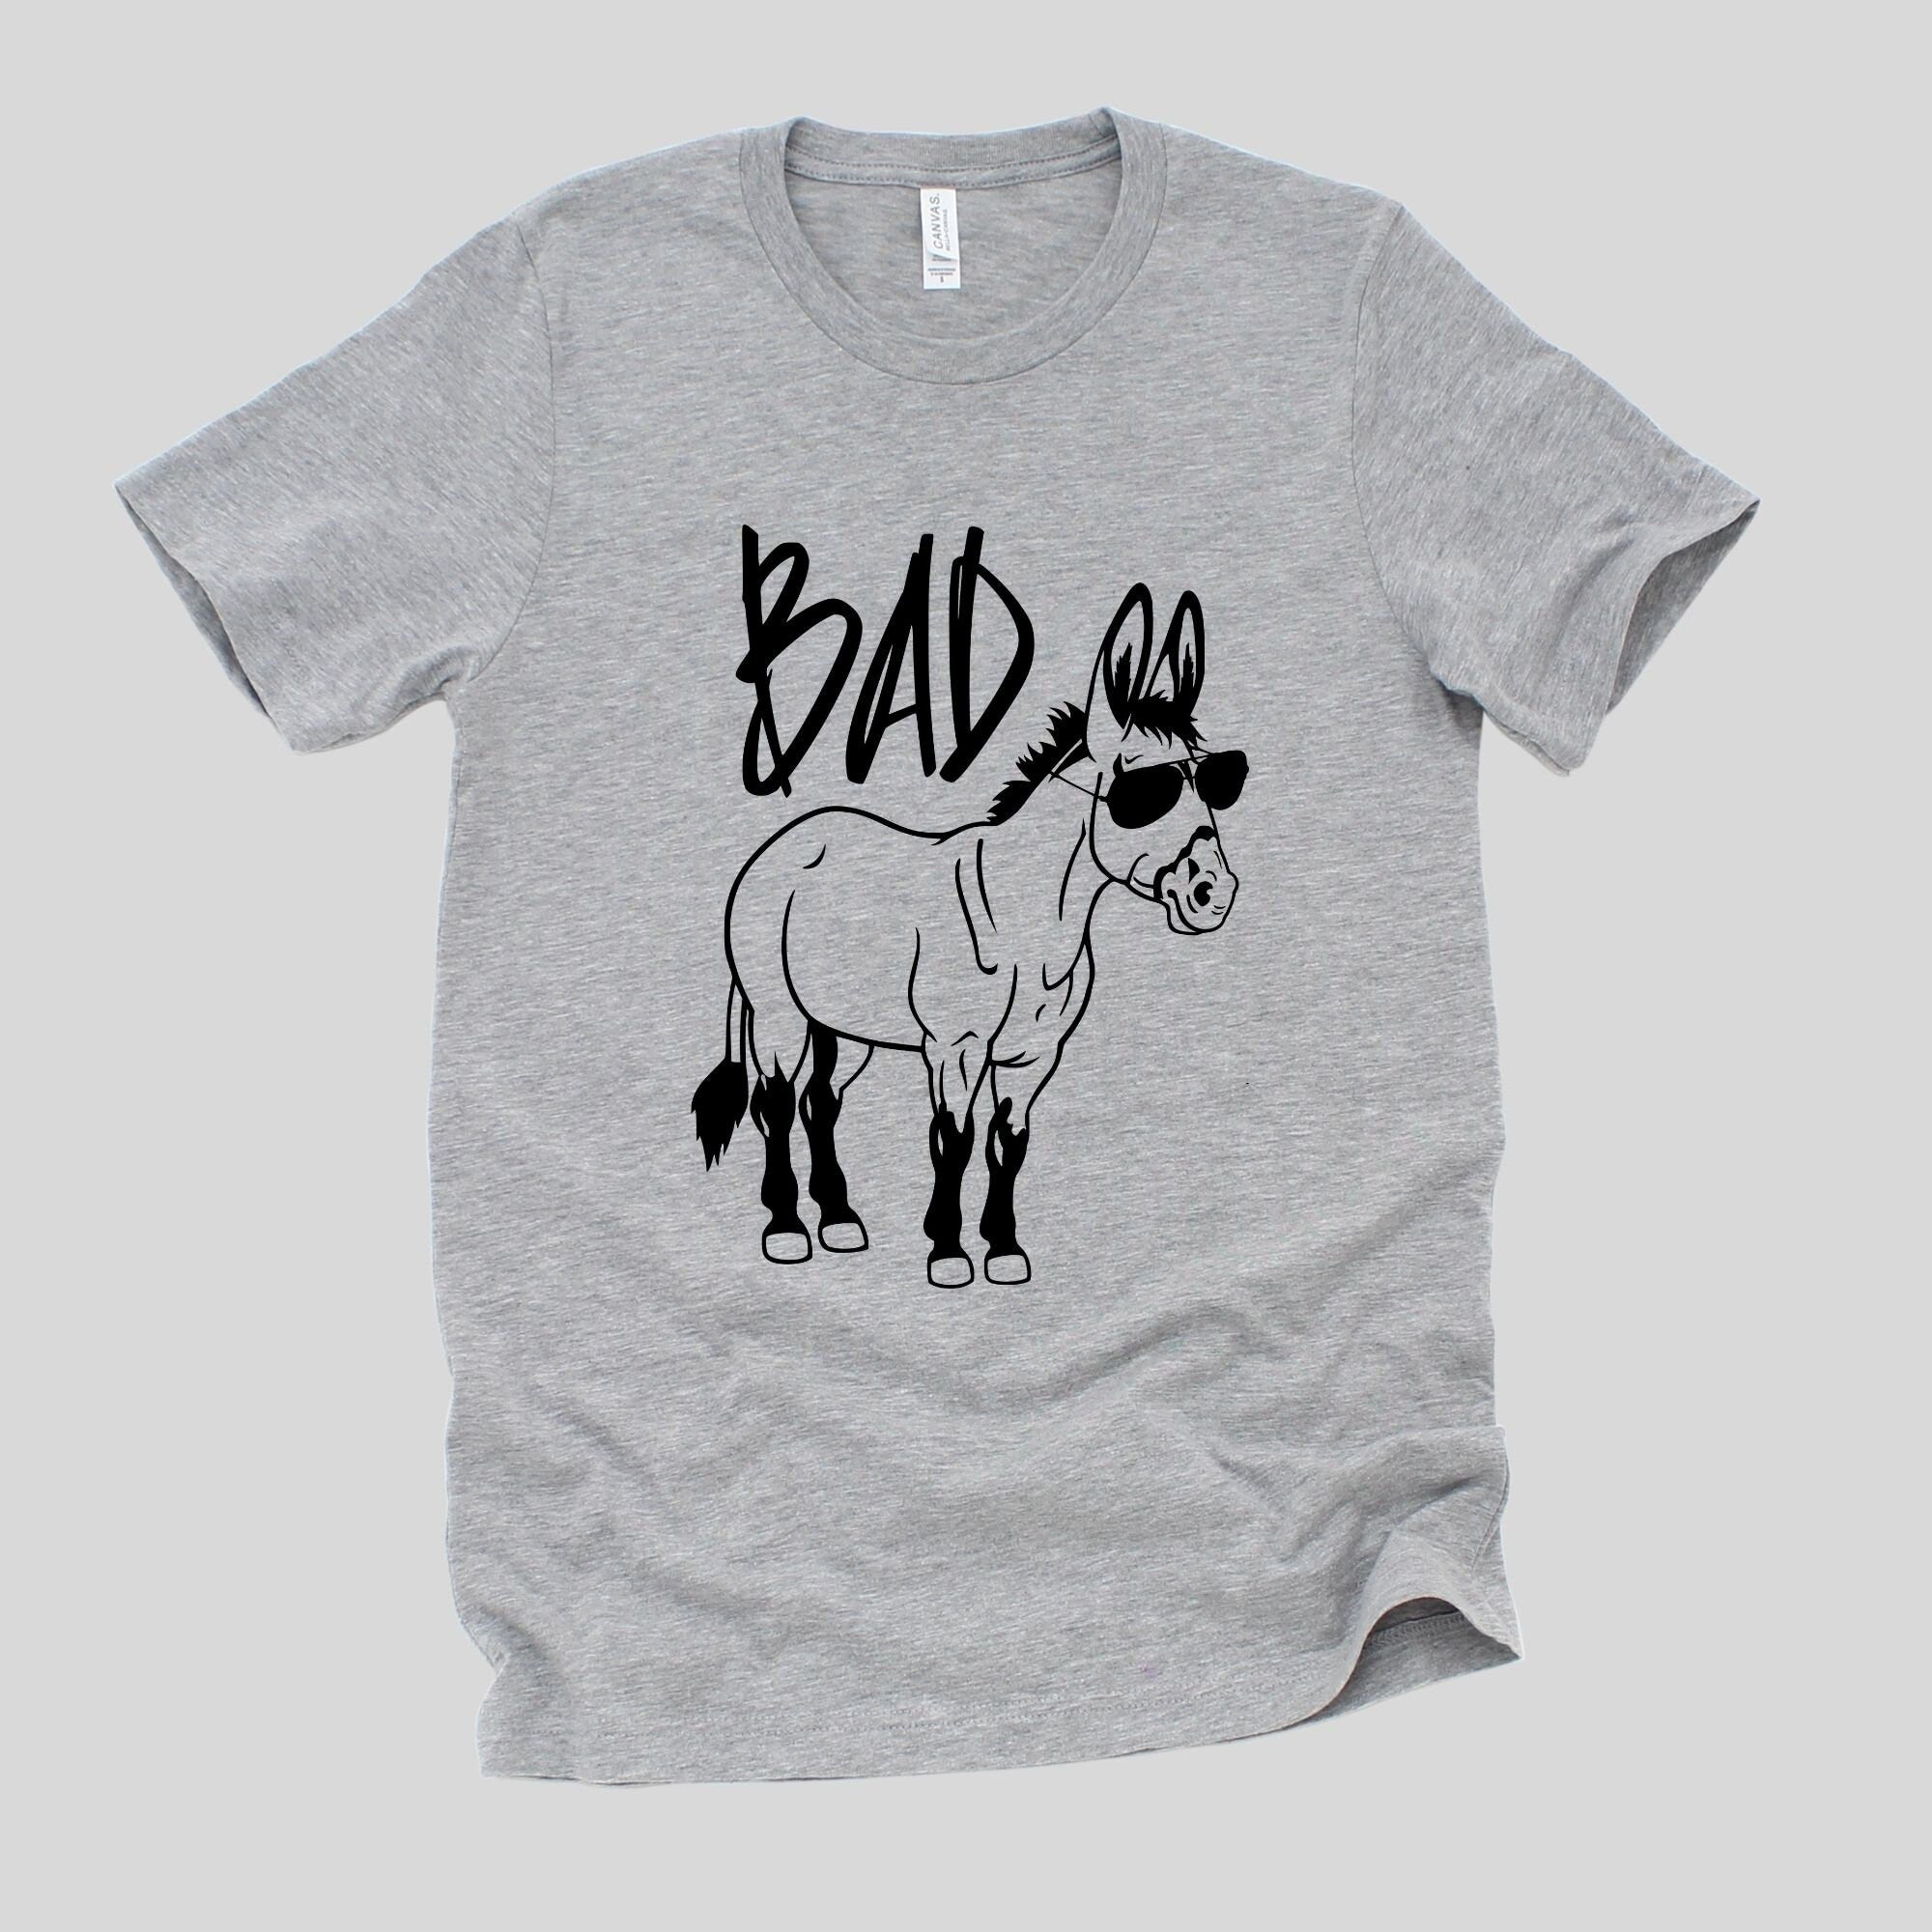 Bad Ass Shirt for Men *UNISEX FIT*-Mens Tees-208 Tees Wholesale, Idaho